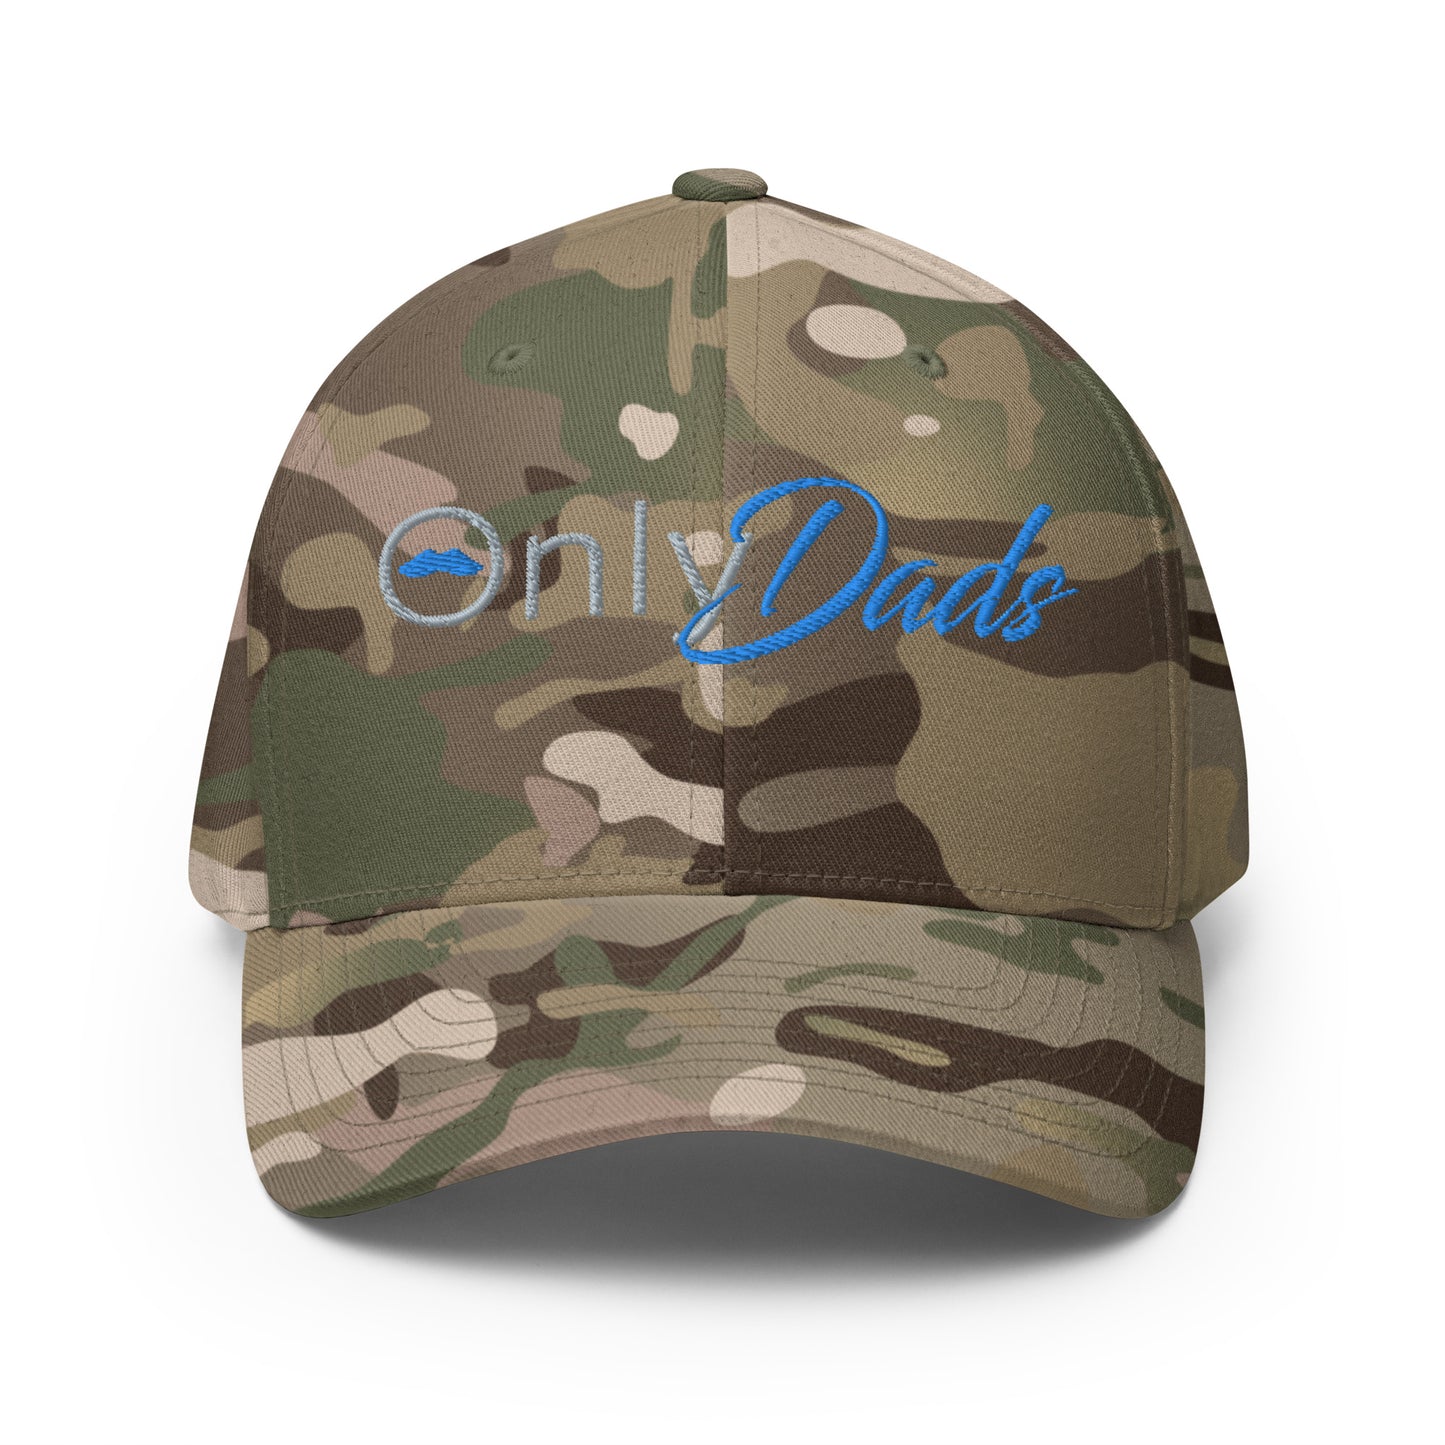 "OnlyDads" Structured flexfit Cap